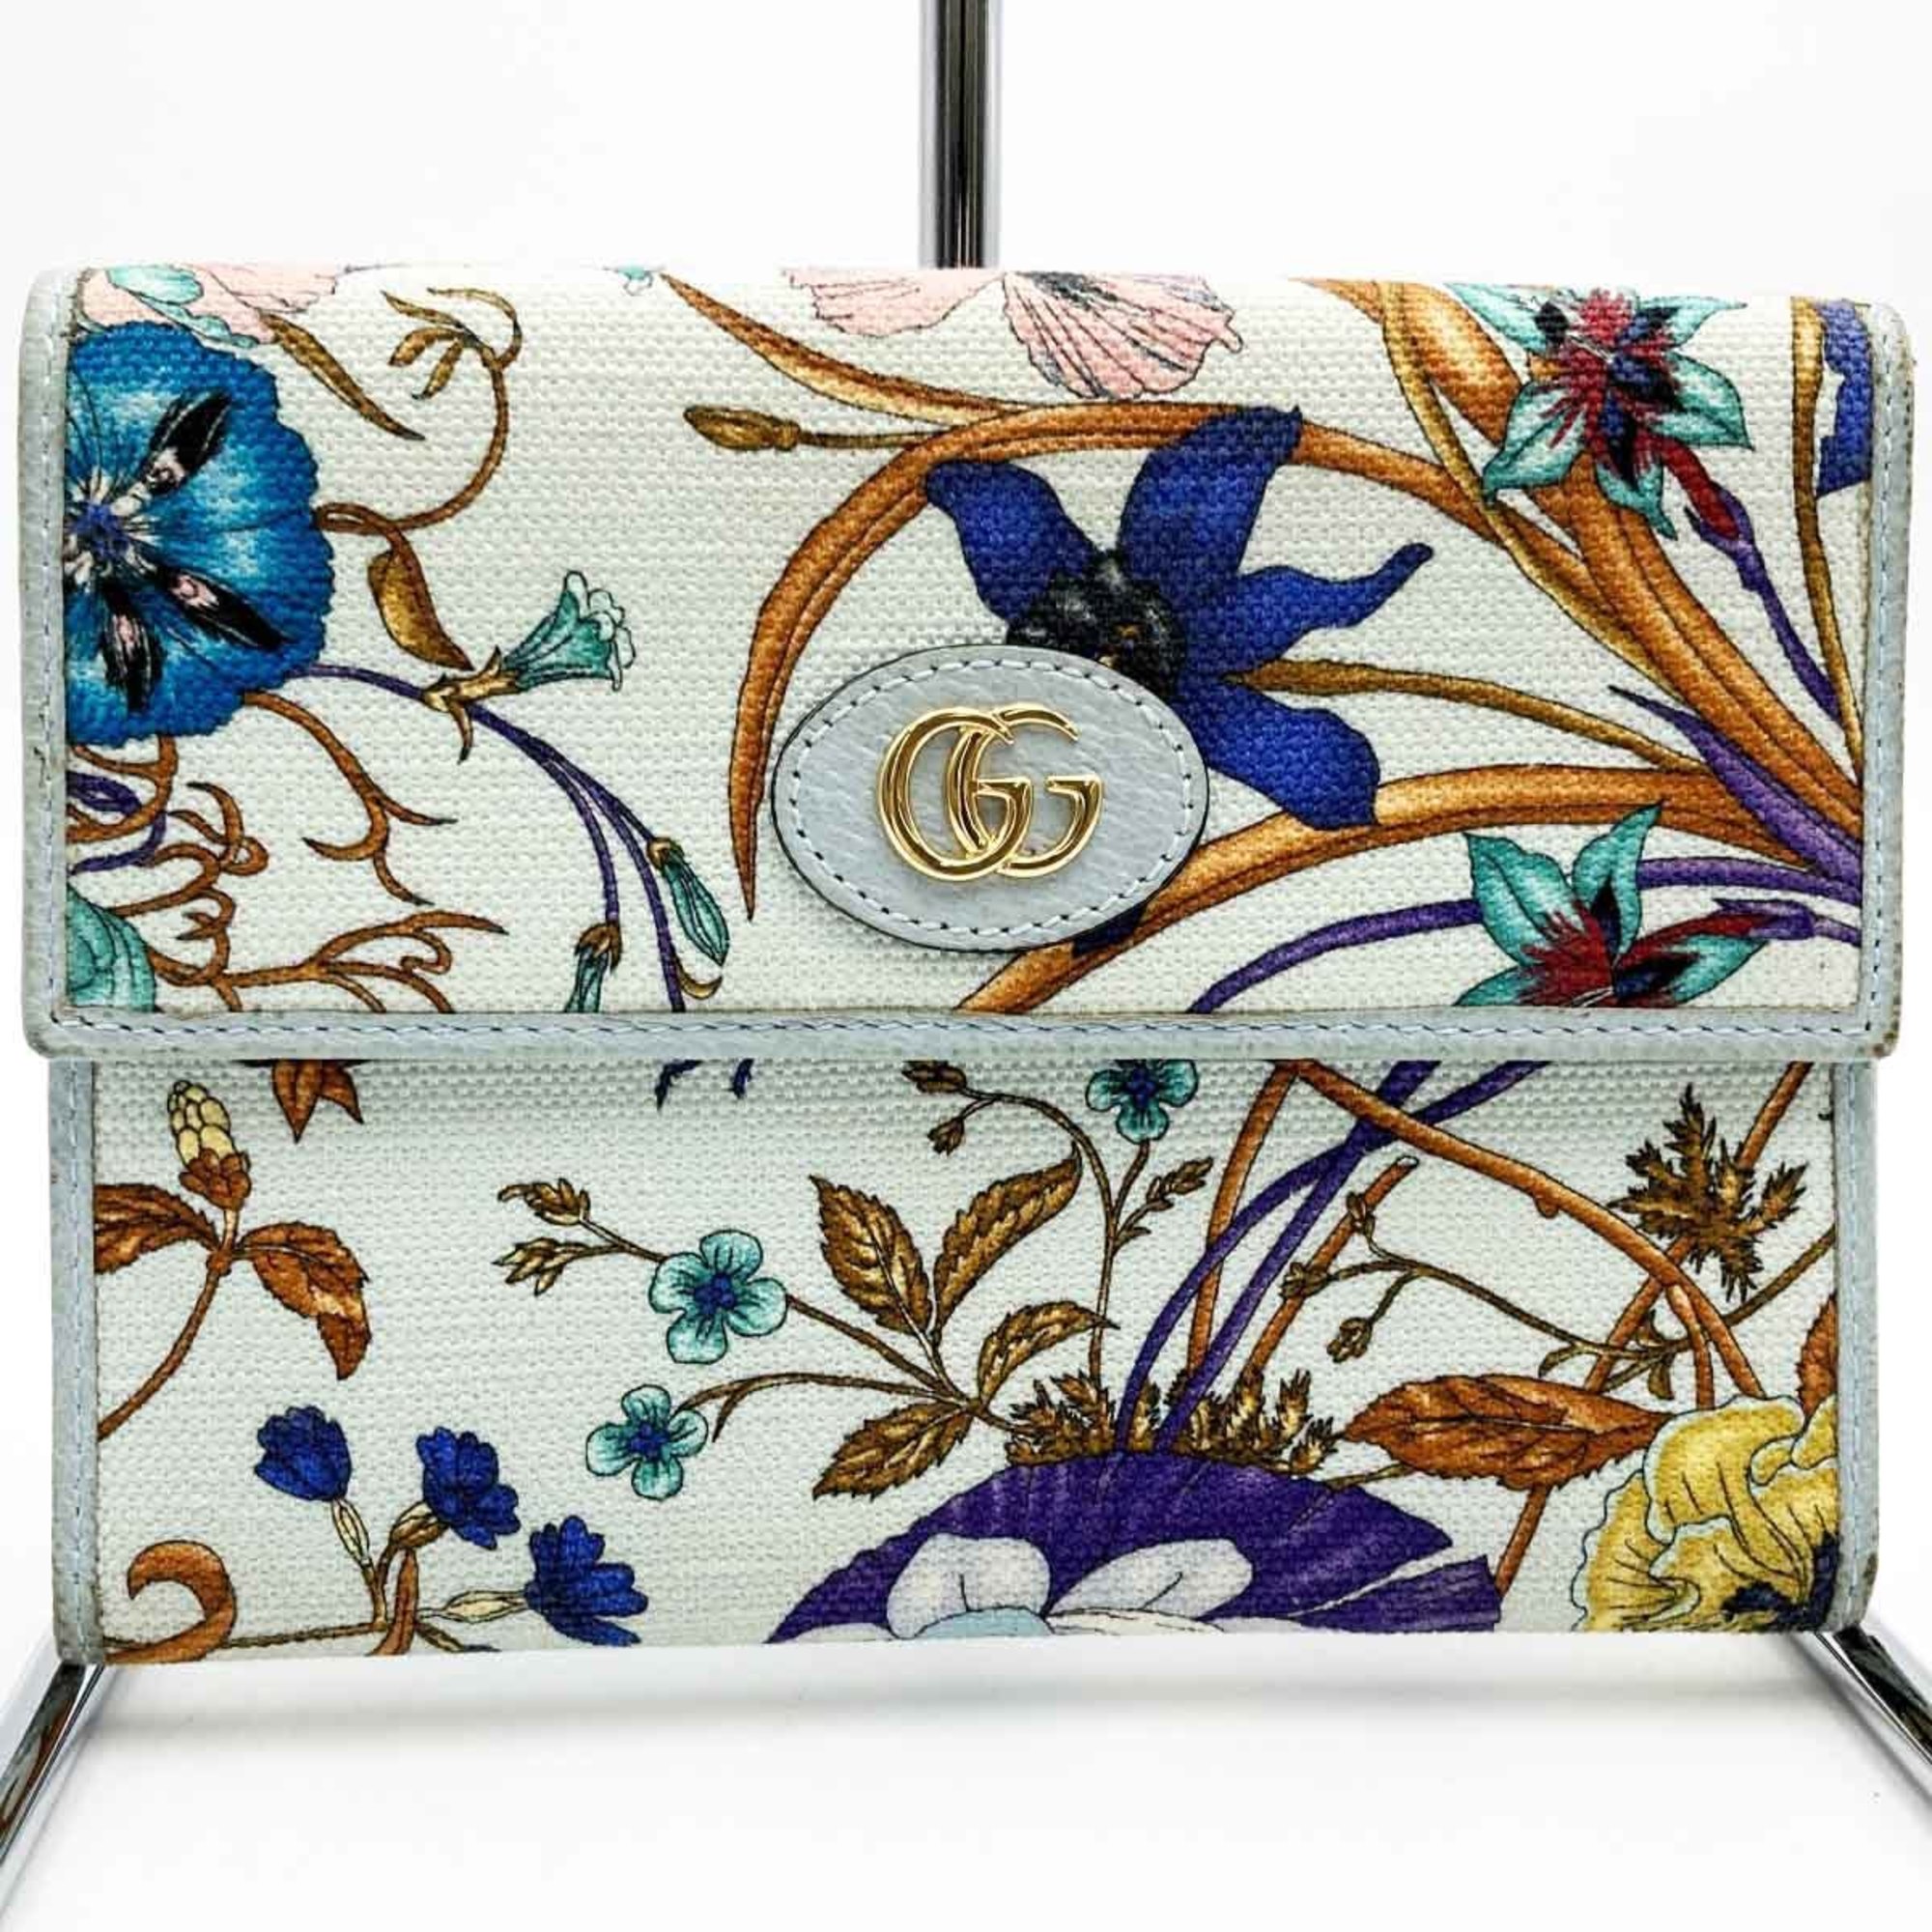 GUCCI Gucci Document Case Flora Limited Edition Pouch Wallet Blue Canvas Women's Accessories 577350 ITX9XFUMEF1W